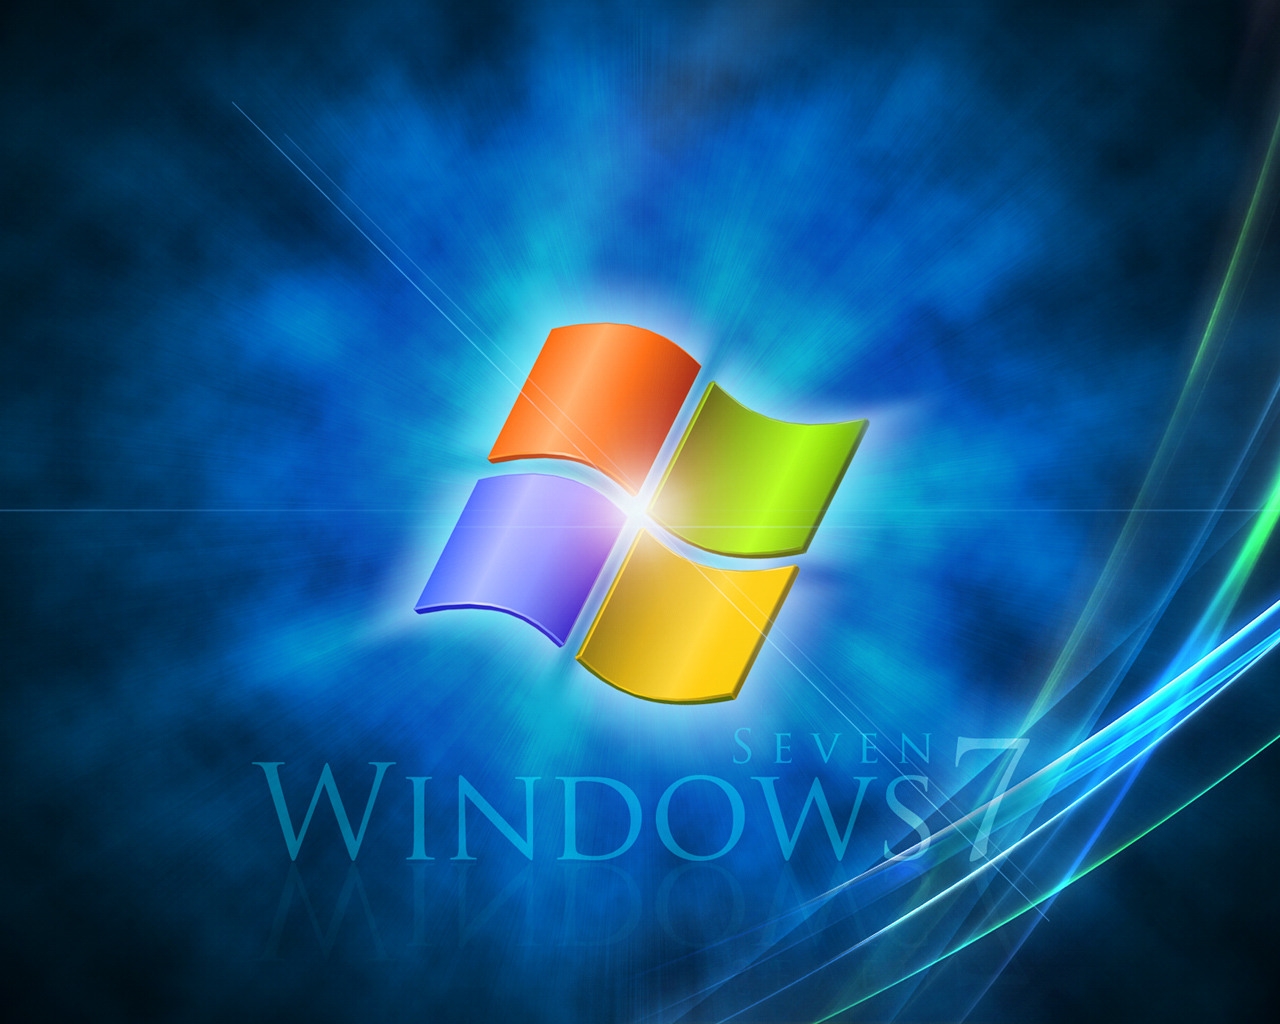 Windows 7 Light Rays for 1280 x 1024 resolution